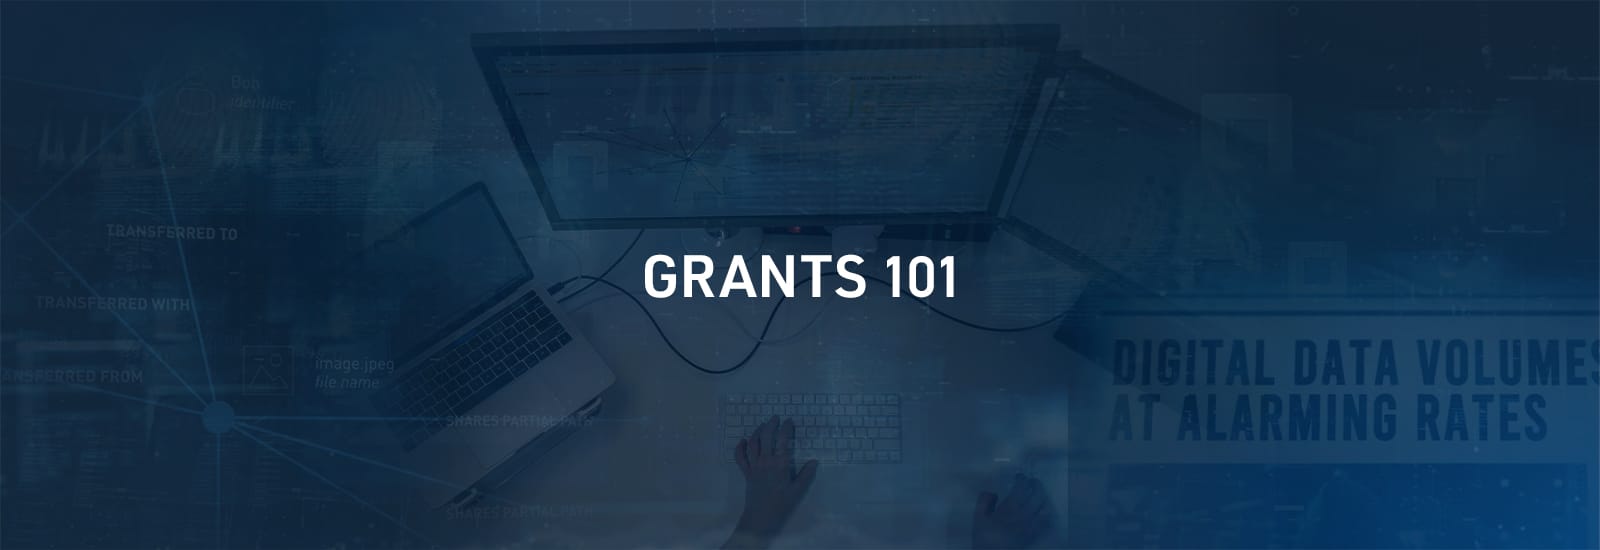 Grants 101